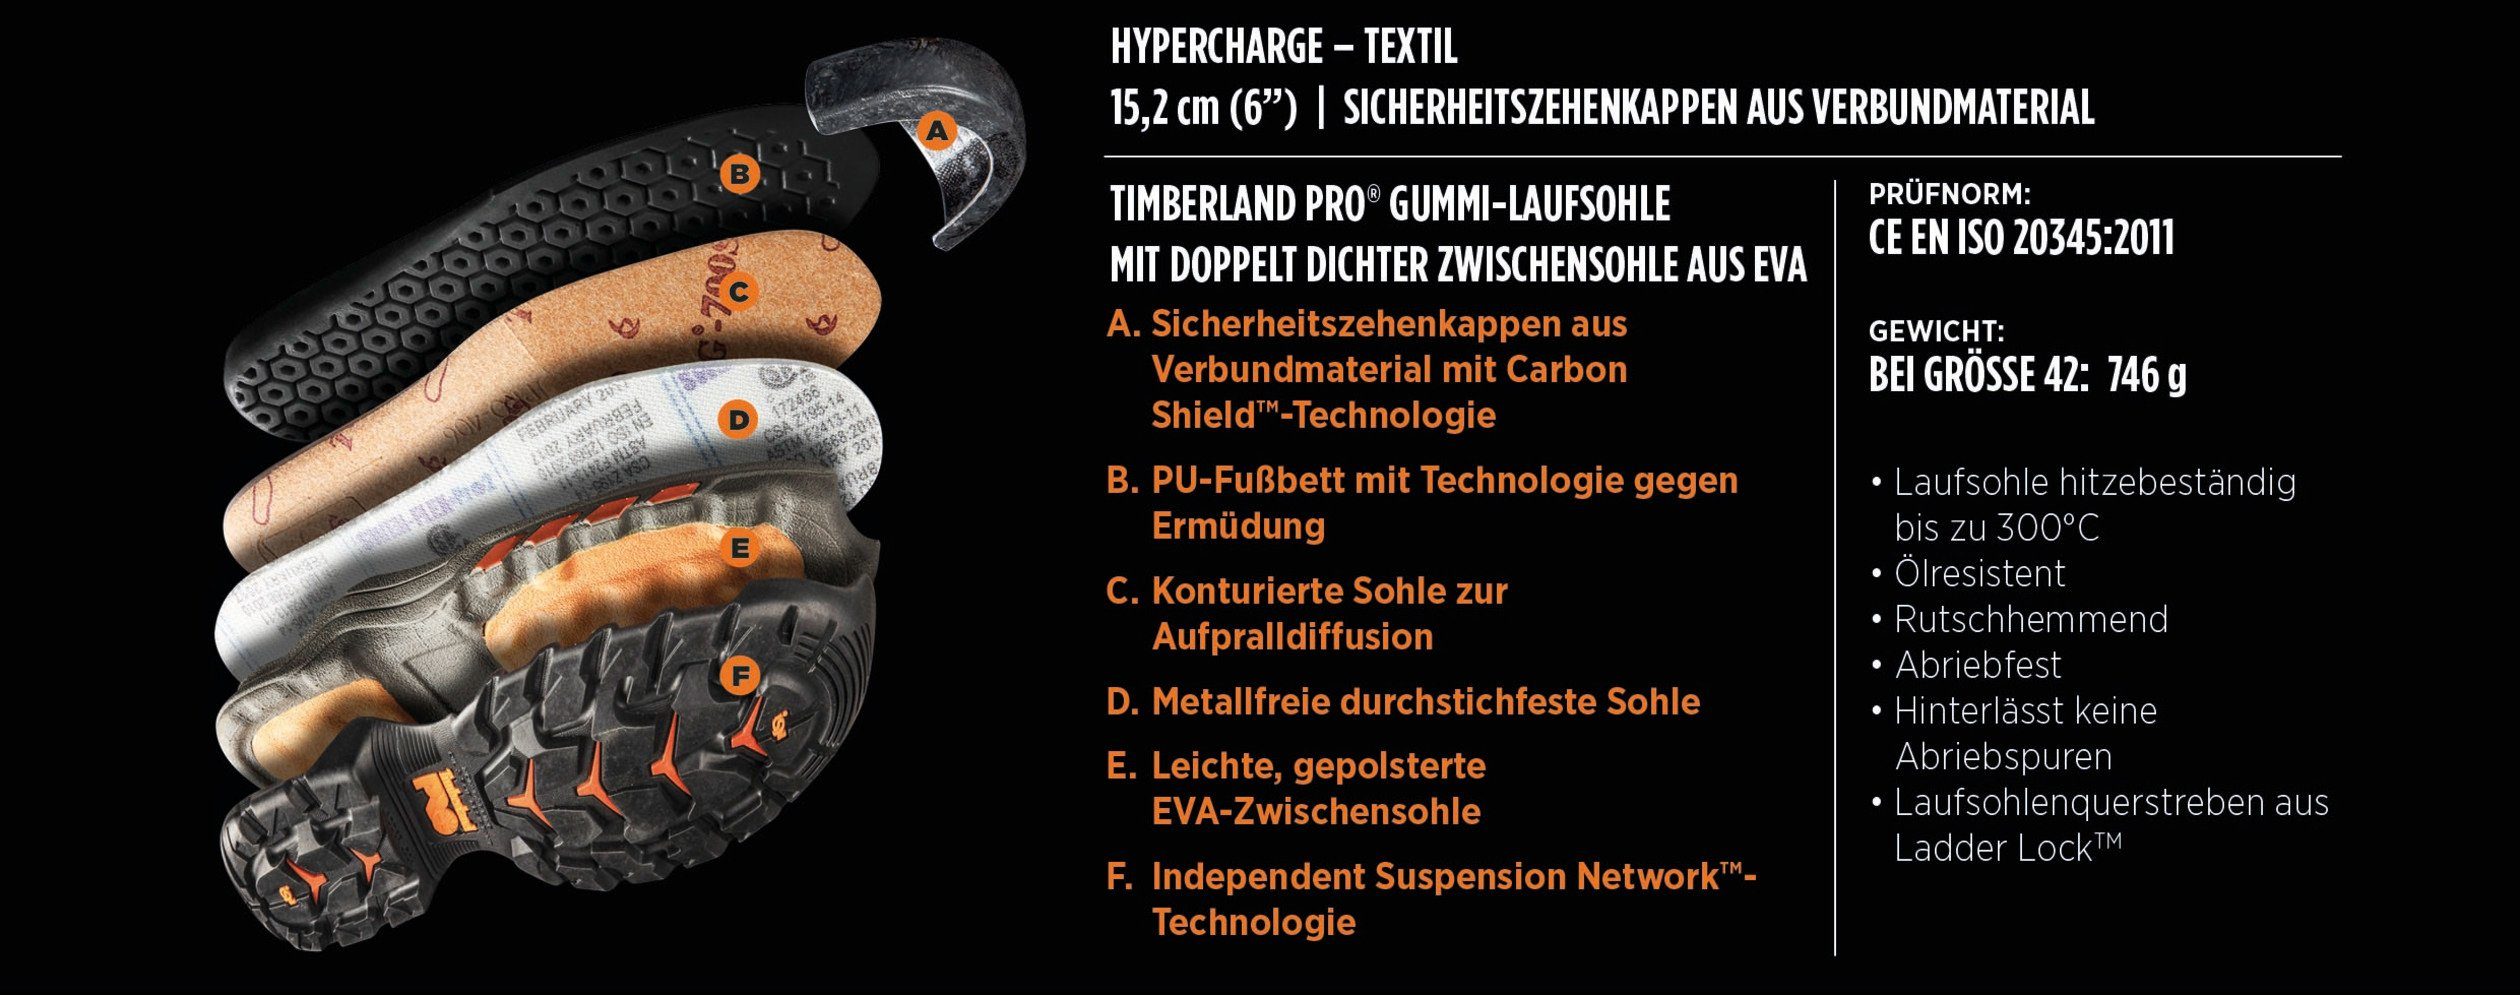 TEXTIL aus Pro HYPERCHARGE Sicherheitsstiefel Timberland S3, Recyclingmaterial CORDURA®Ökogewebe